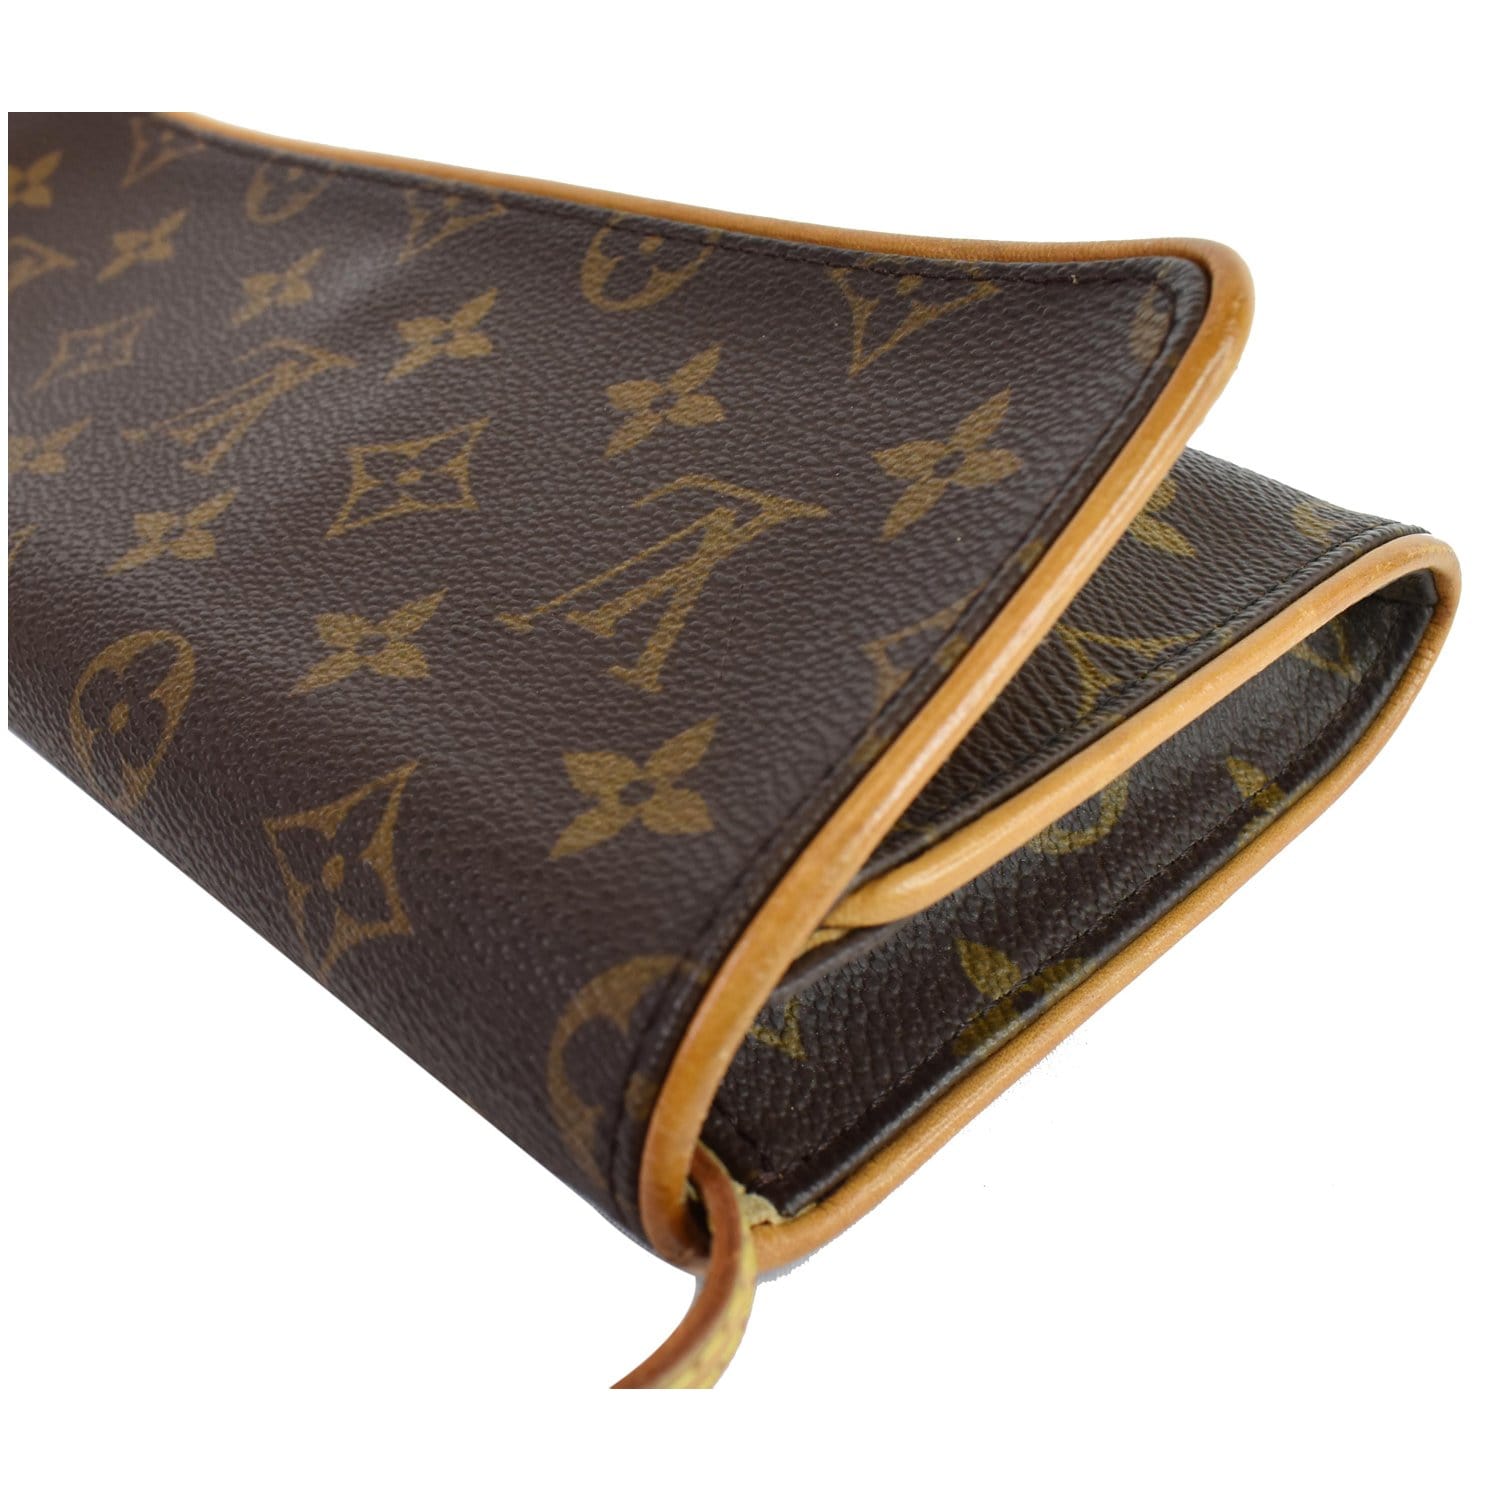 Louis Vuitton Travel Duffel Bags 9282